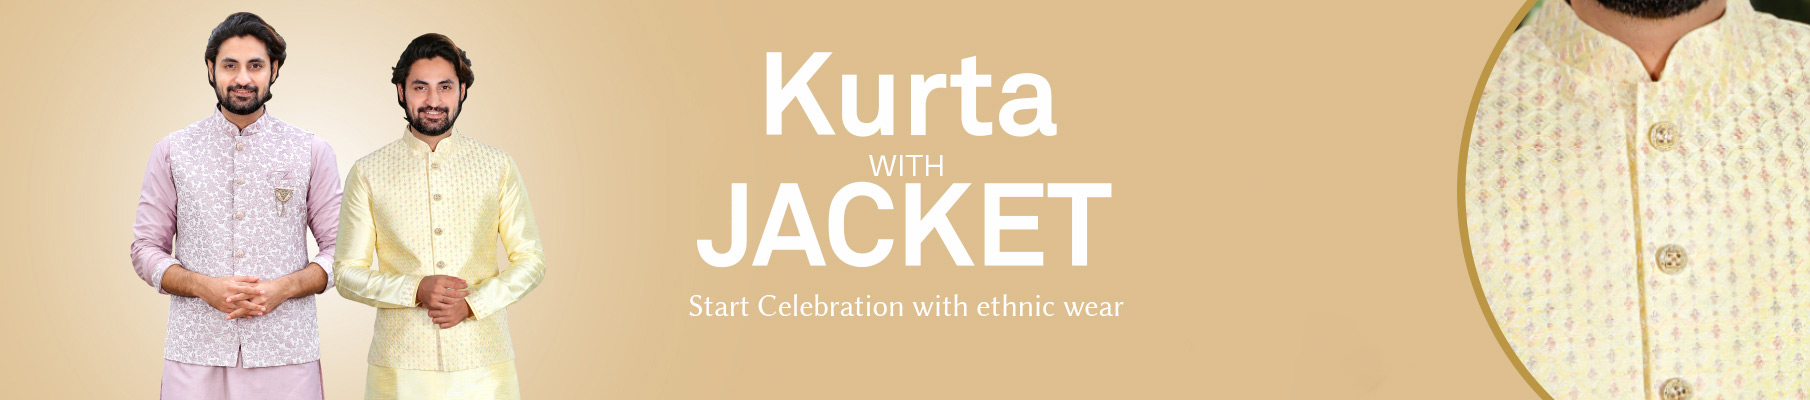 Kurta with Jacket